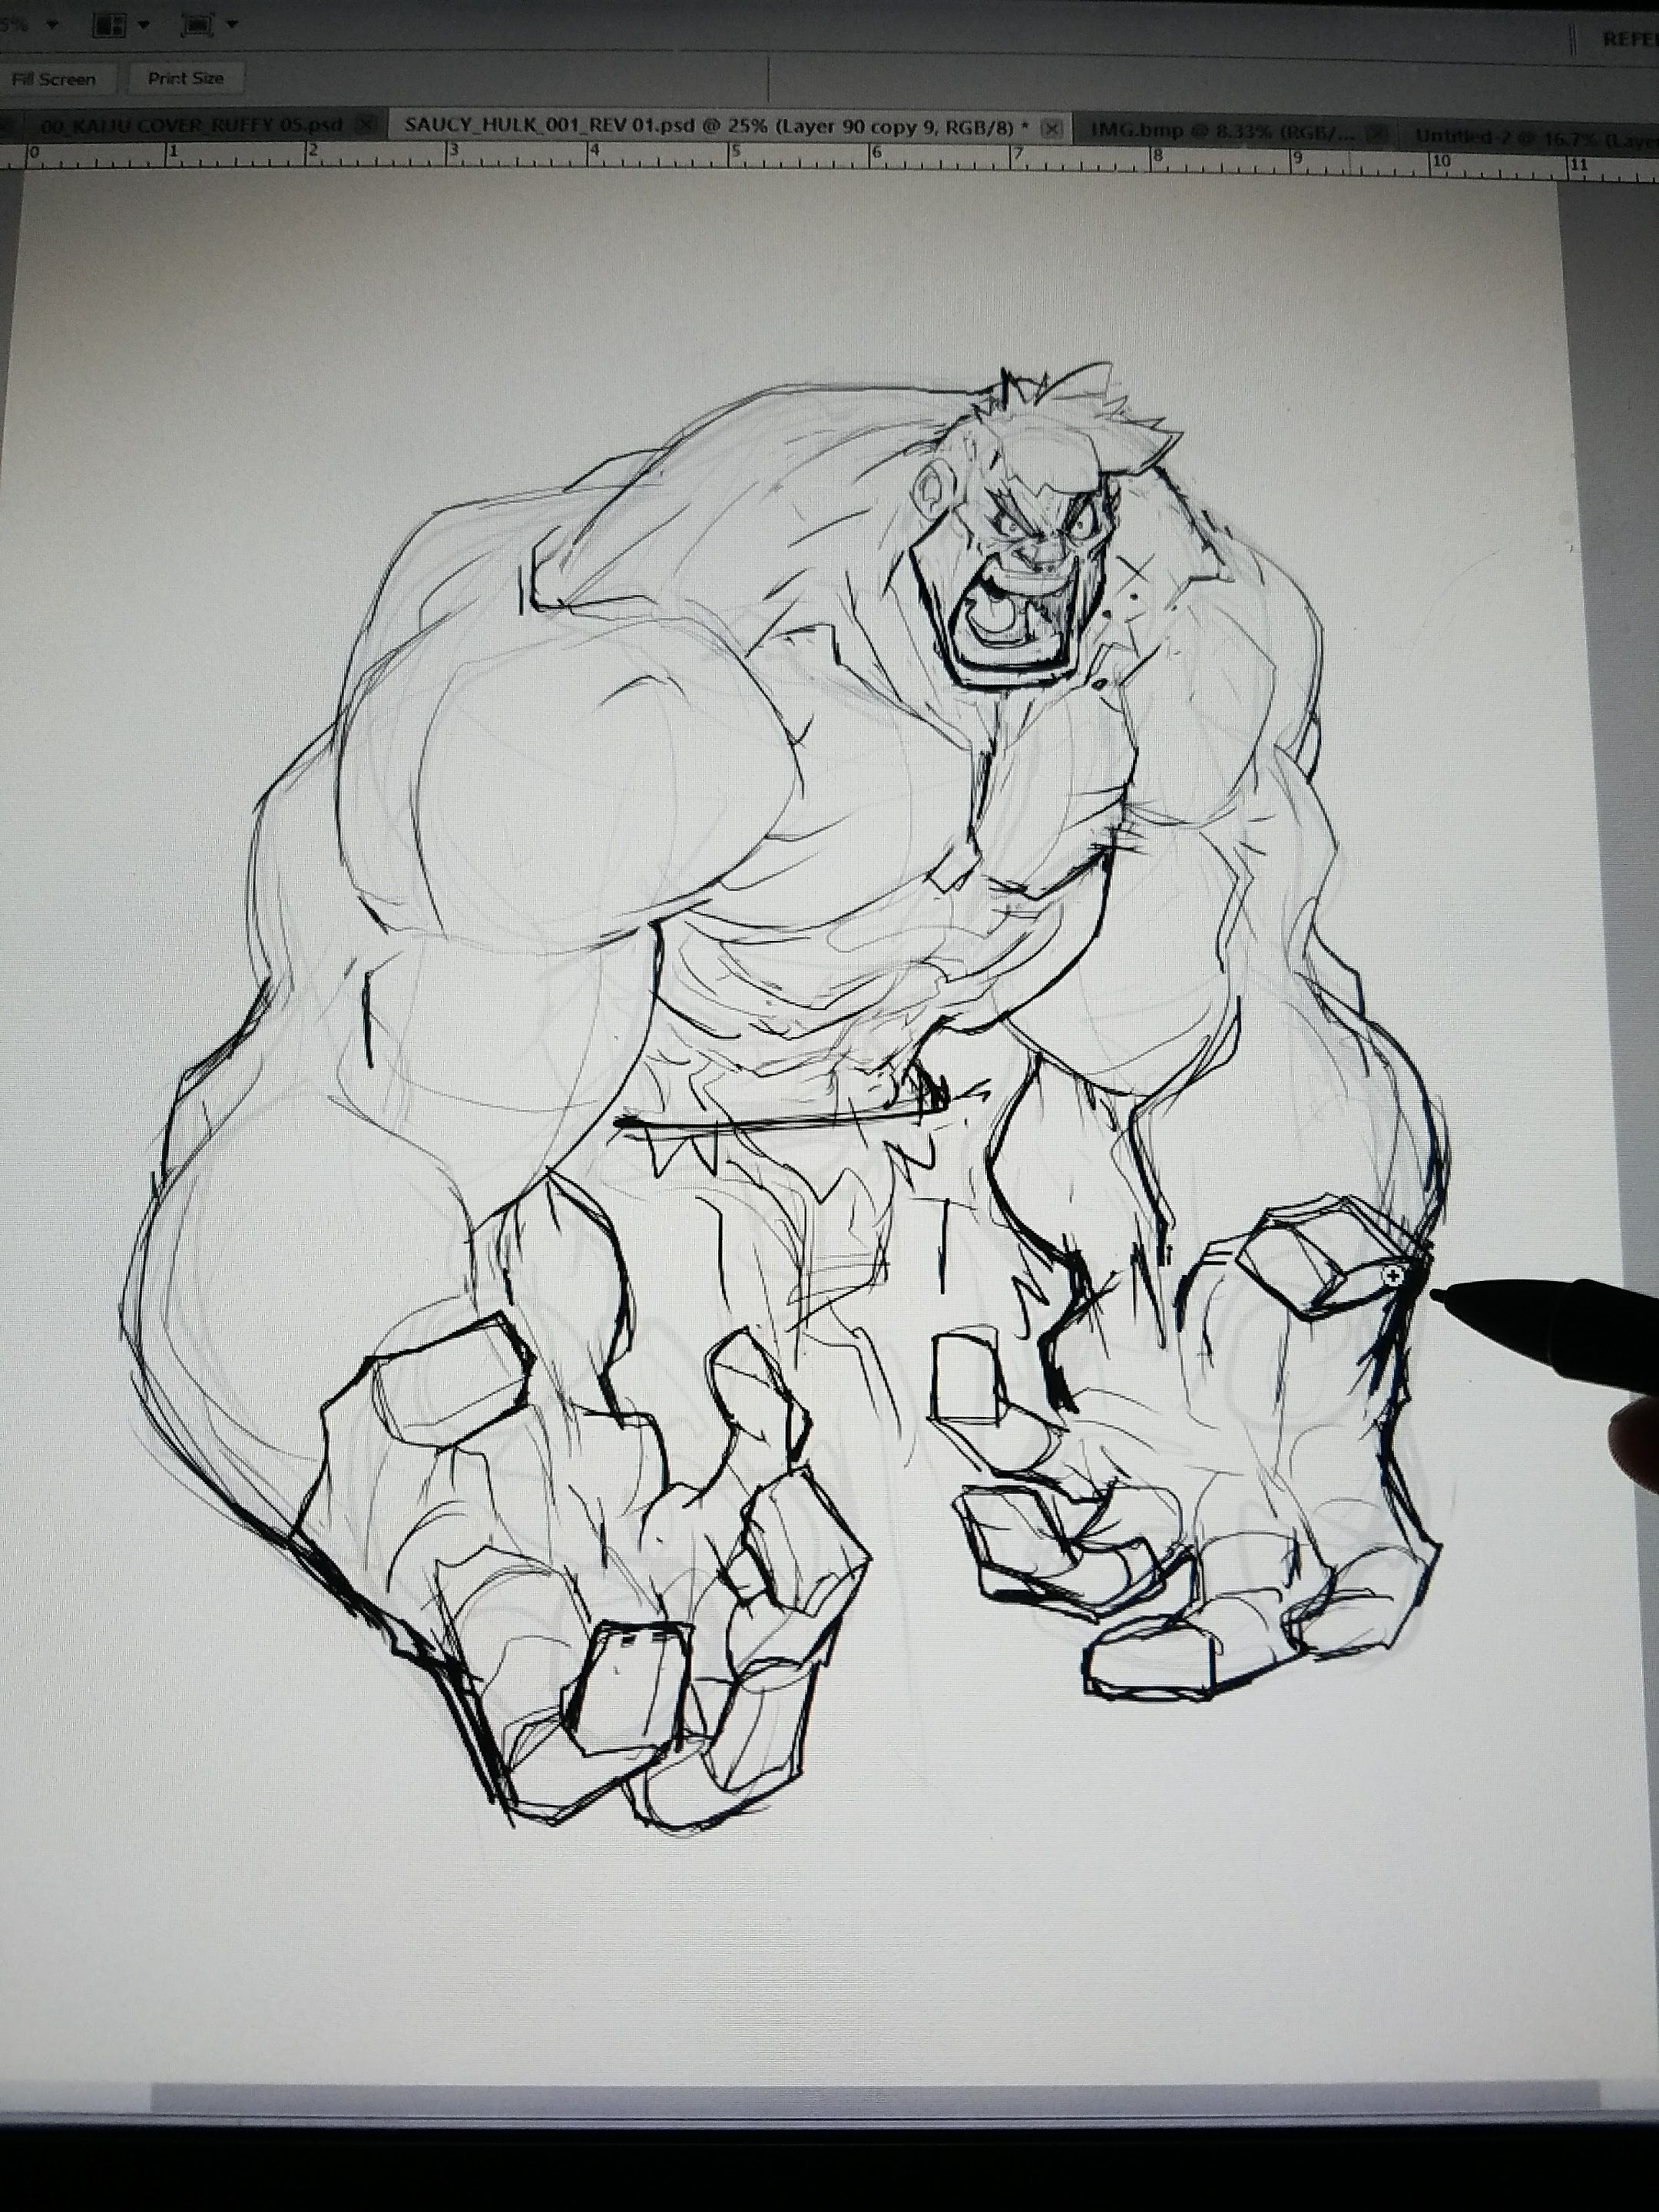 Sketchcraft - Hulk Saucy Commish